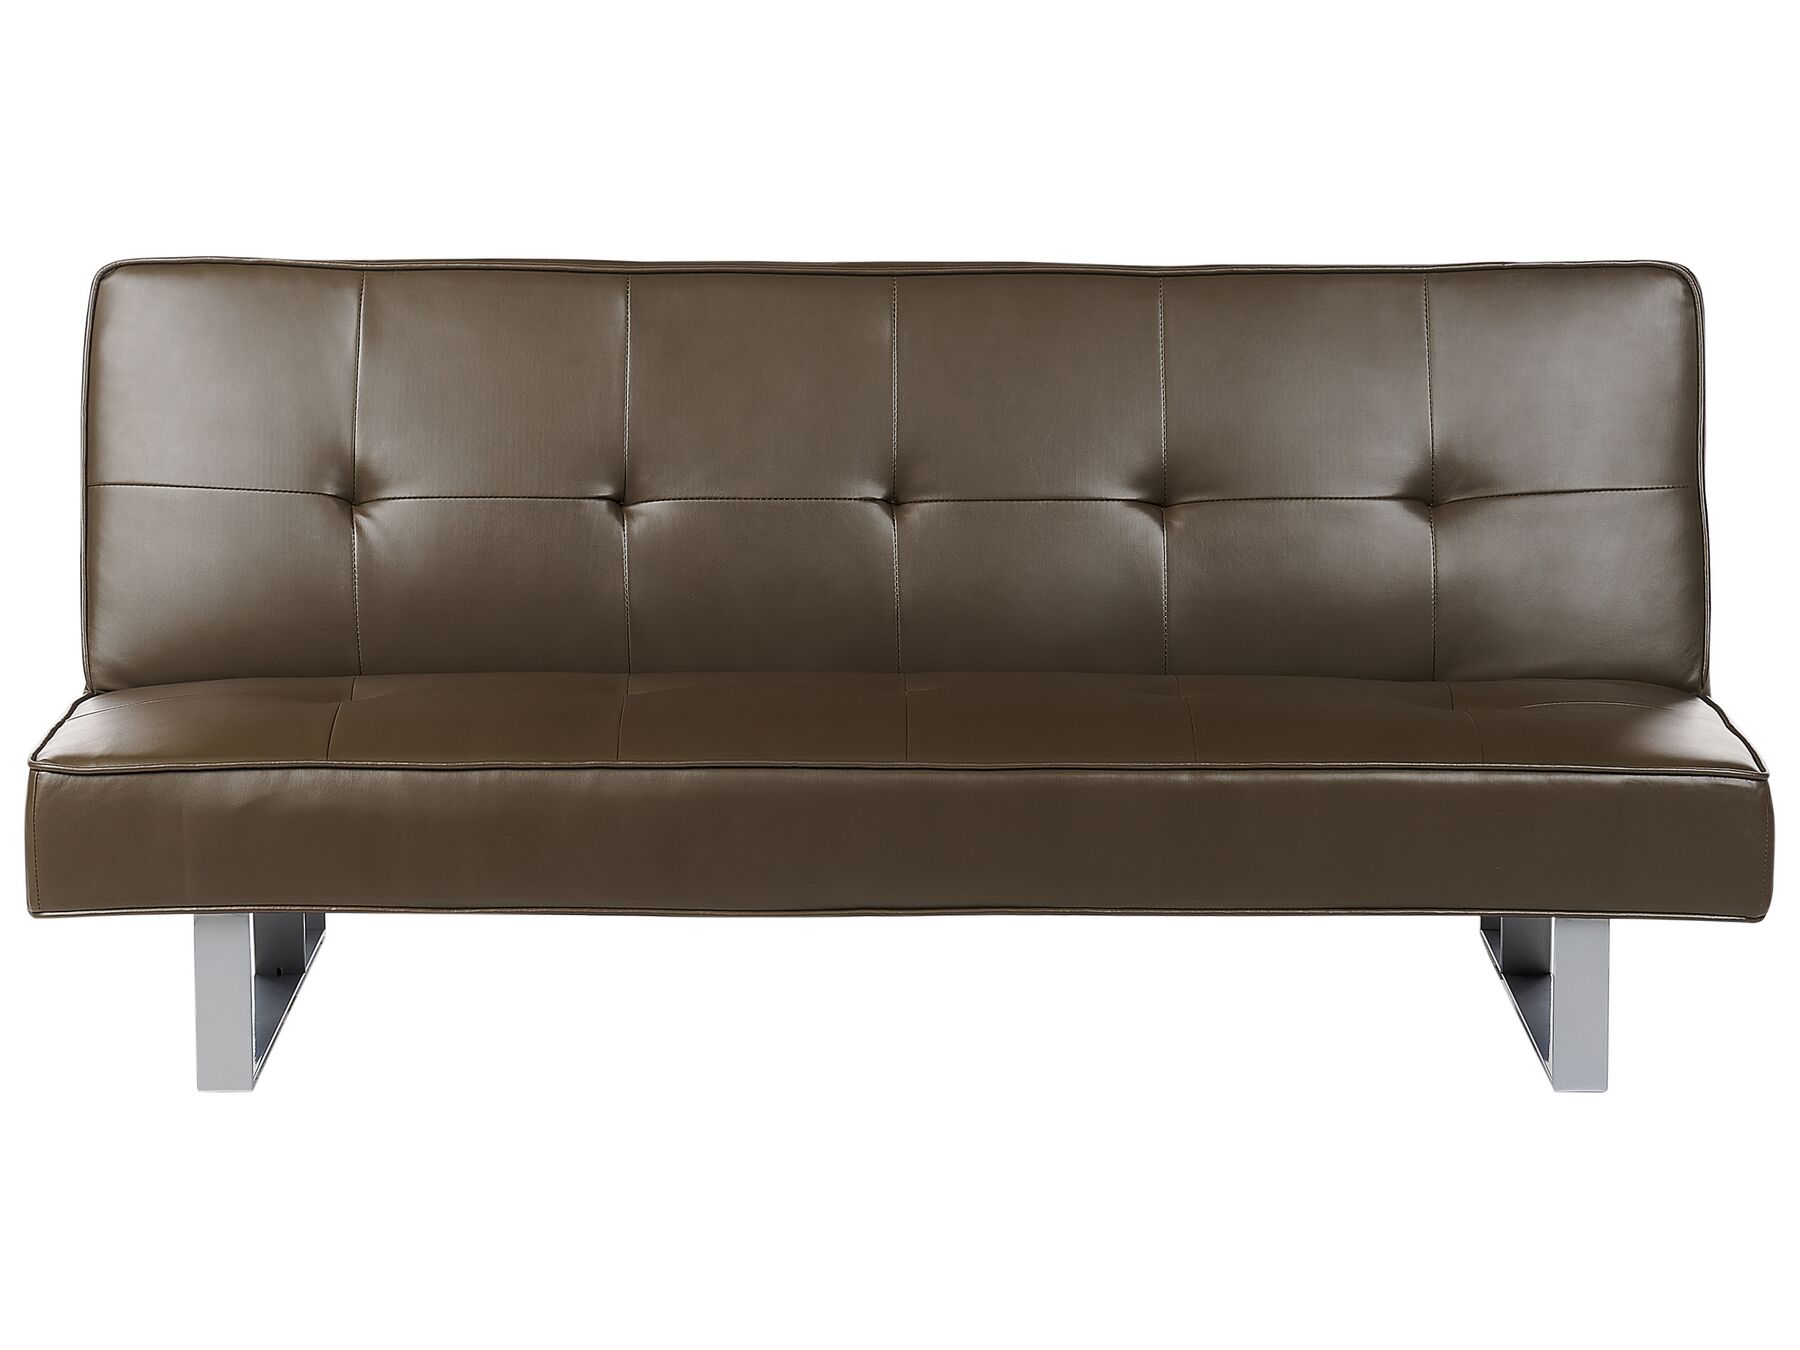 3-istuttava sohva keinonahka ruskea 189 cm DERBY pieni_923244